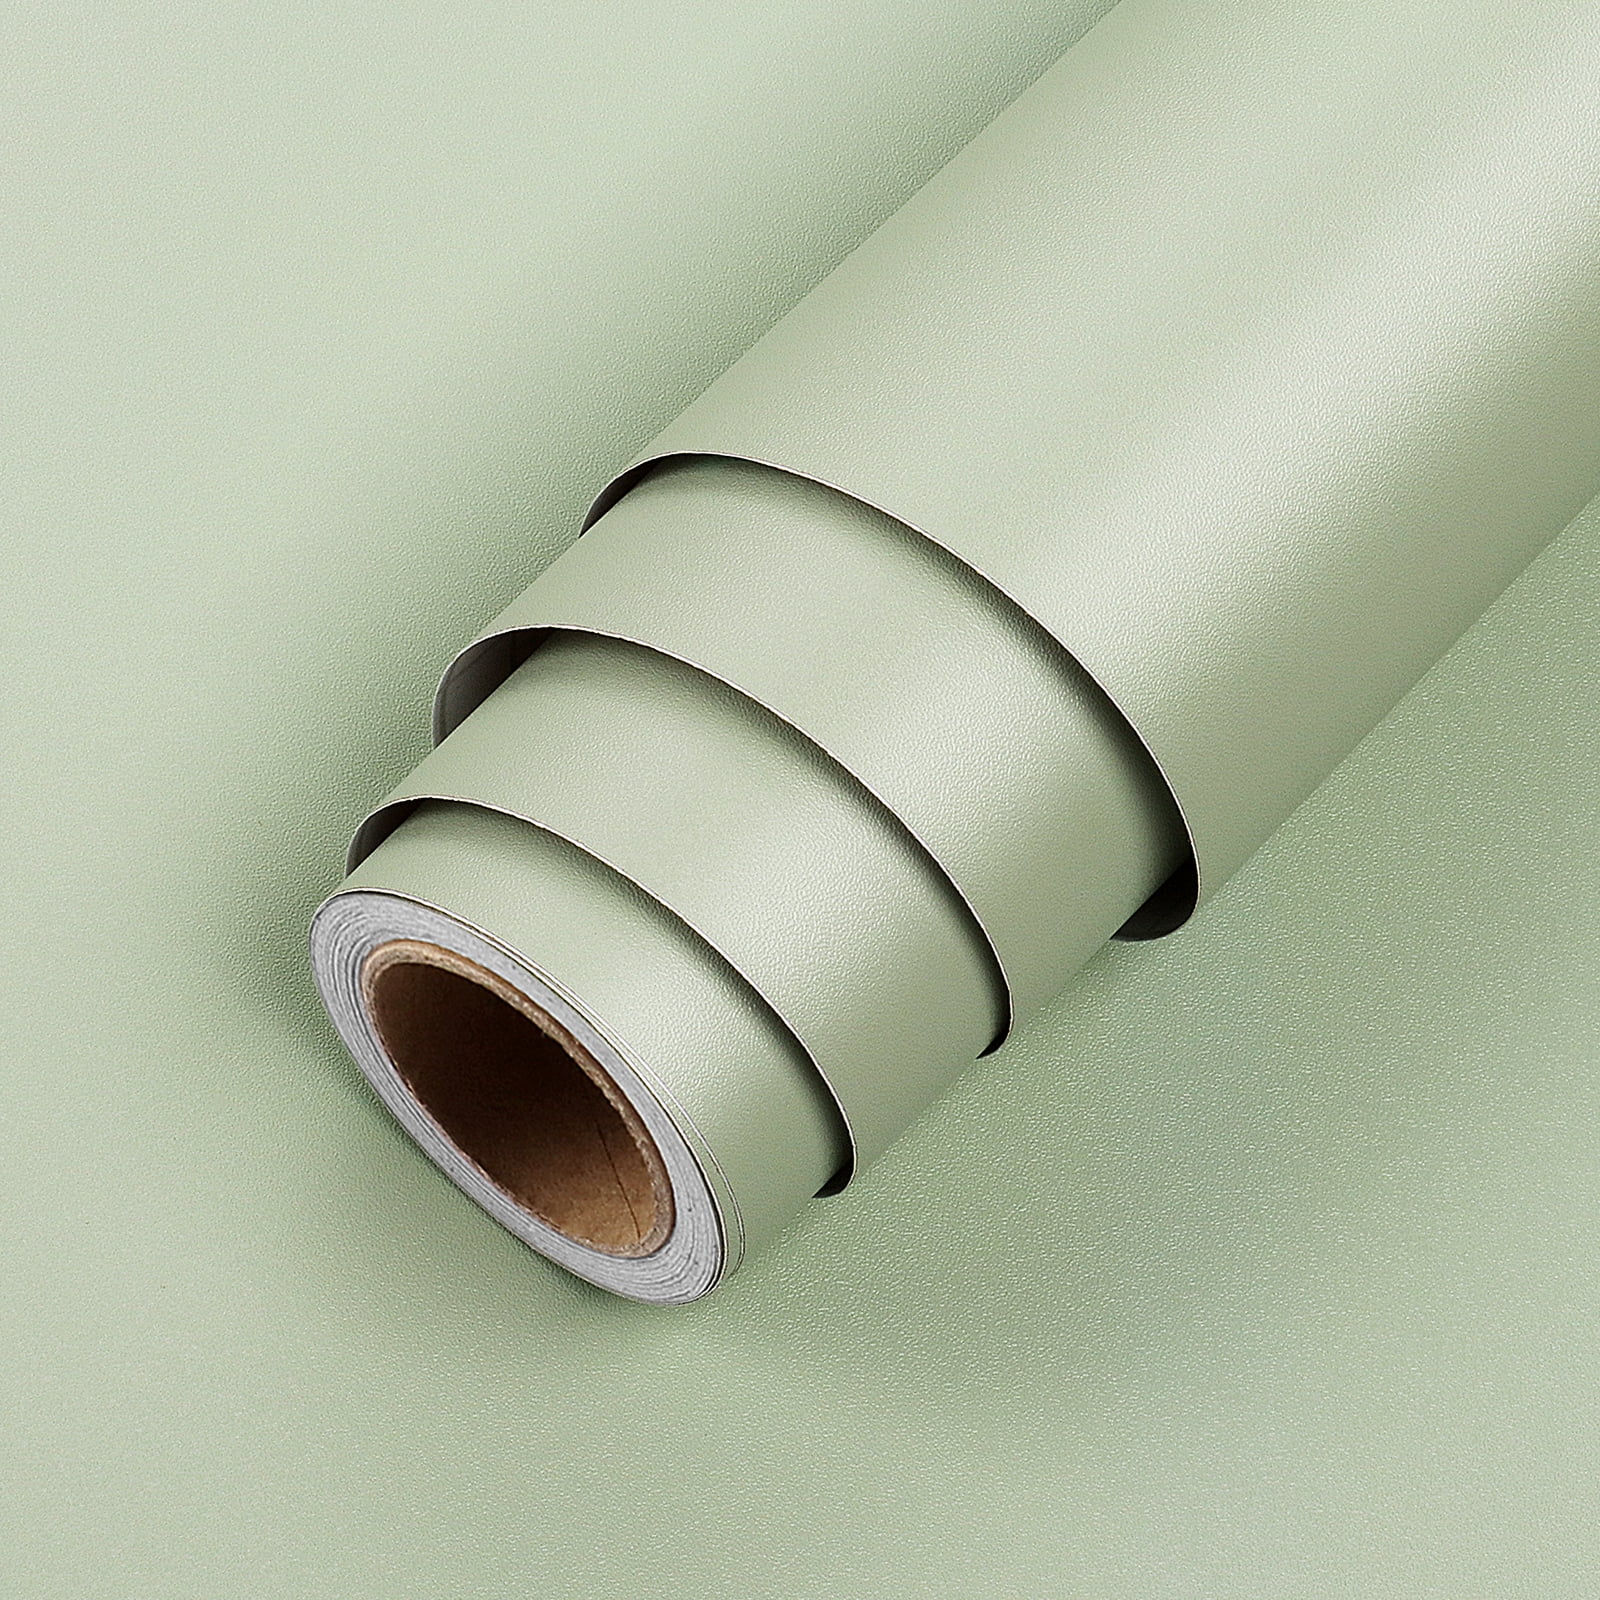 LaCheery Textured Wallpaper Stick and Peel Dark Green Contact Paper De